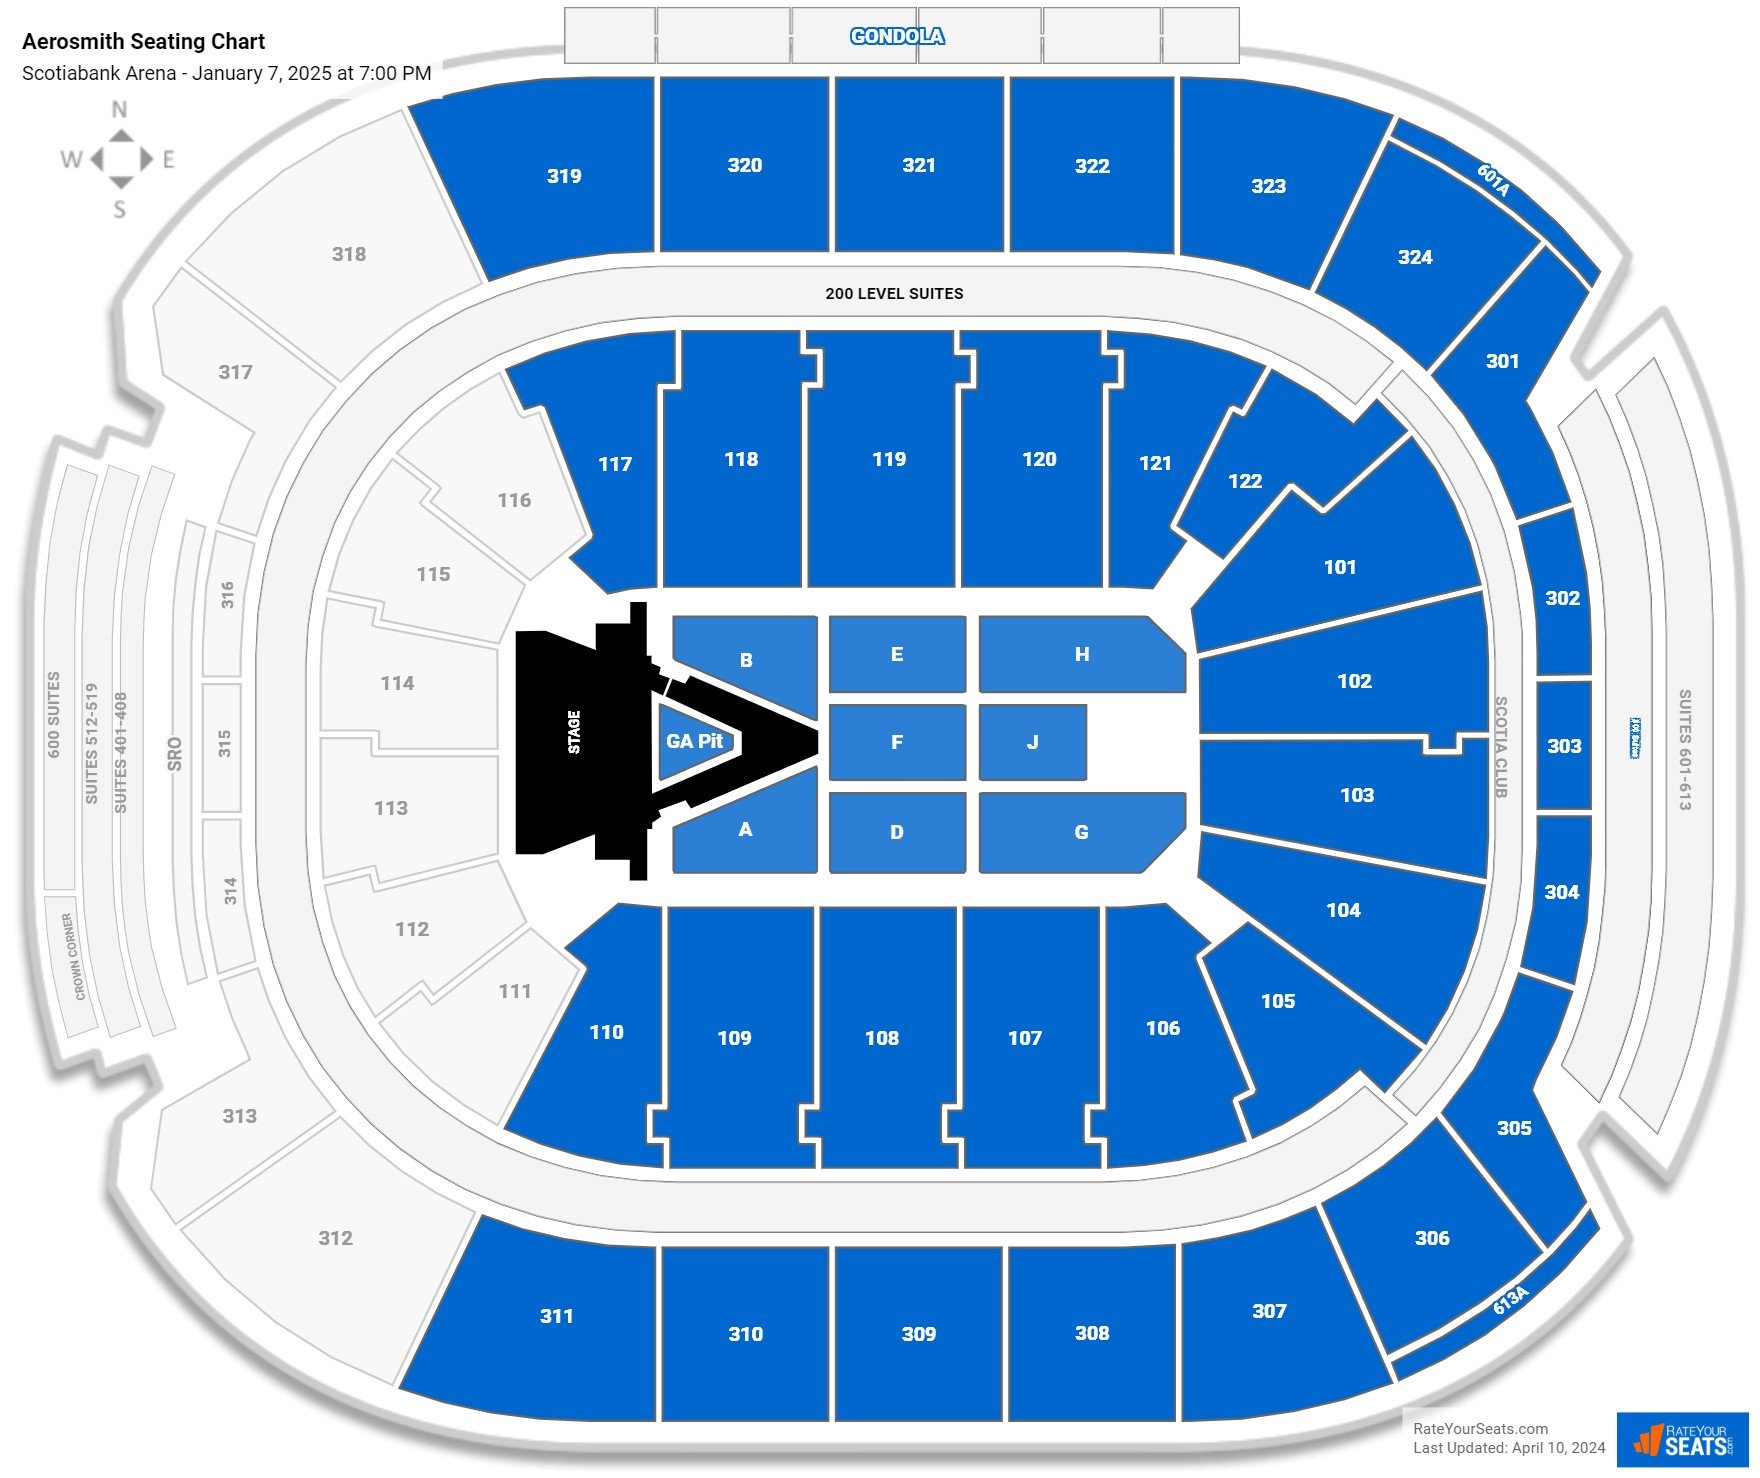 Aerosmith seating chart Scotiabank Arena